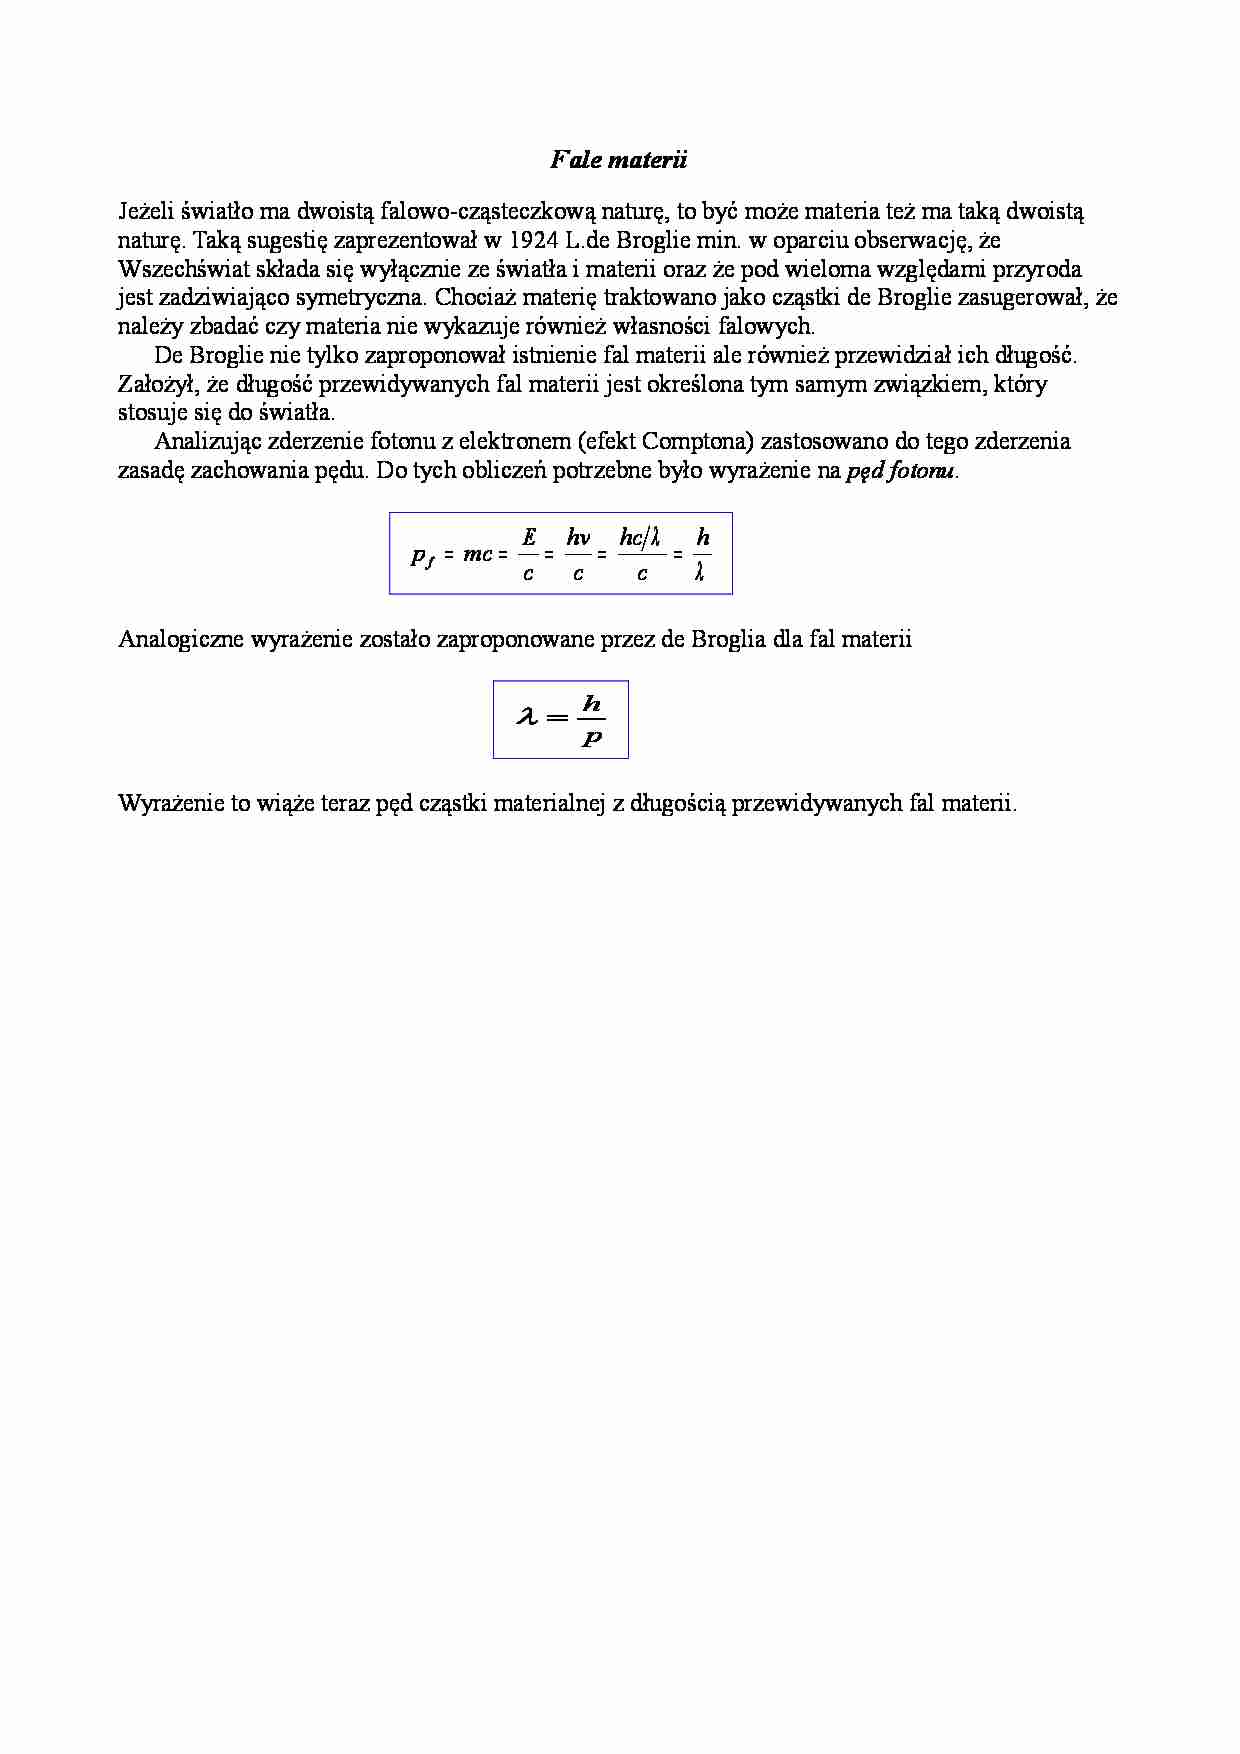 Fizyka - fale materii - strona 1